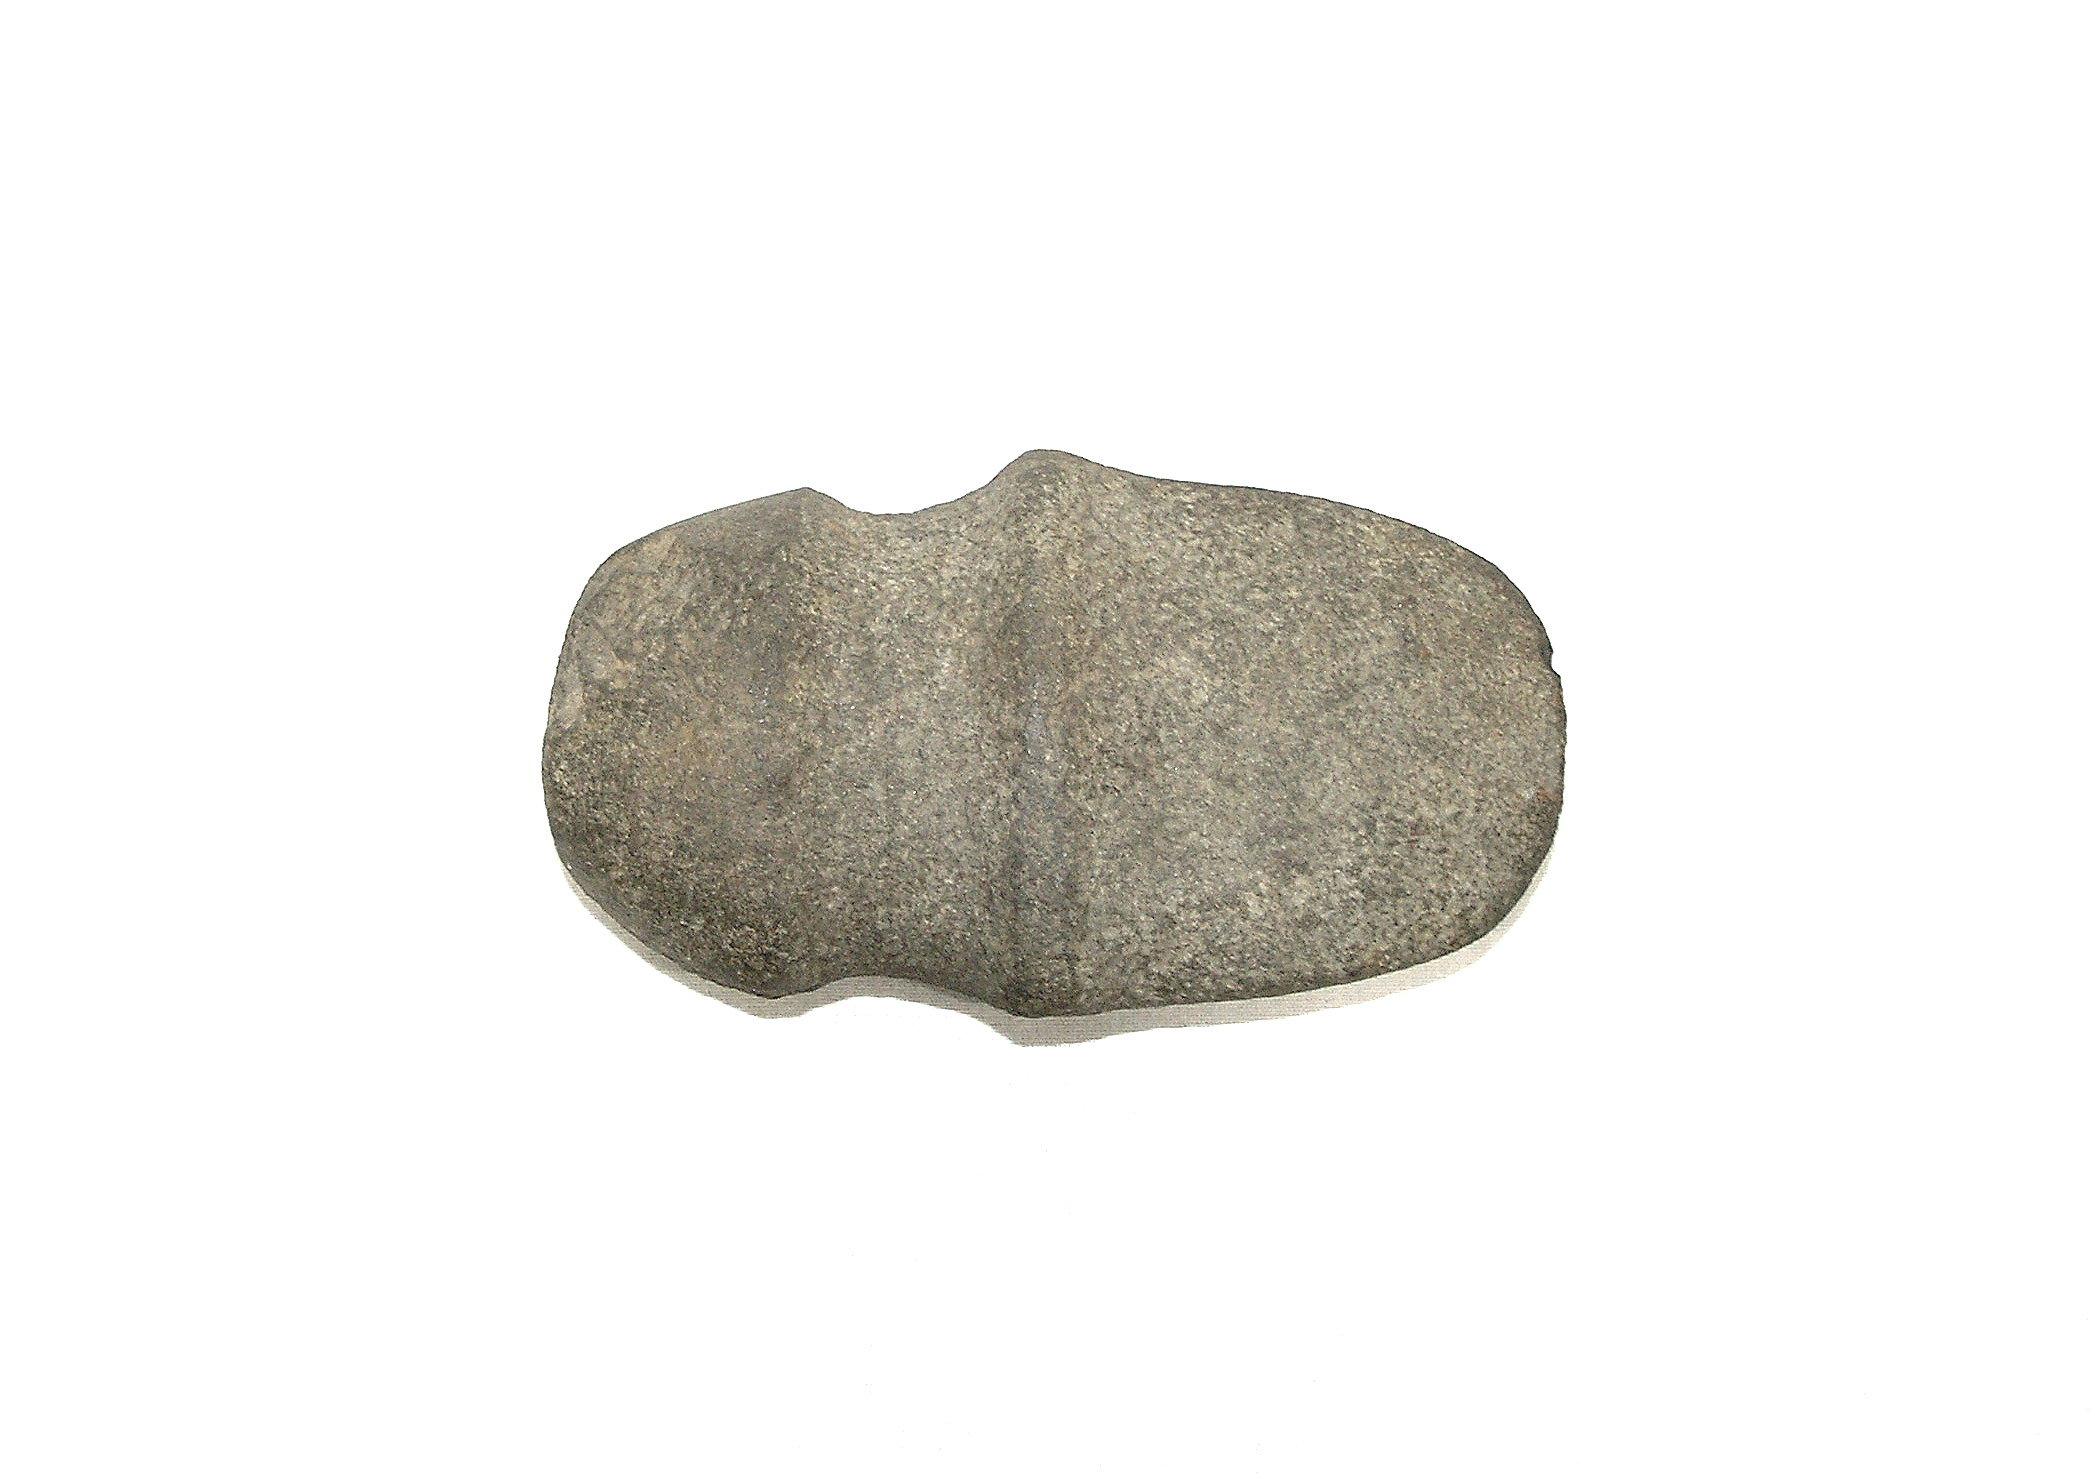 Vintage American Indian Artifact Stone Axe Head.   6-1/2" x 3-1/2"